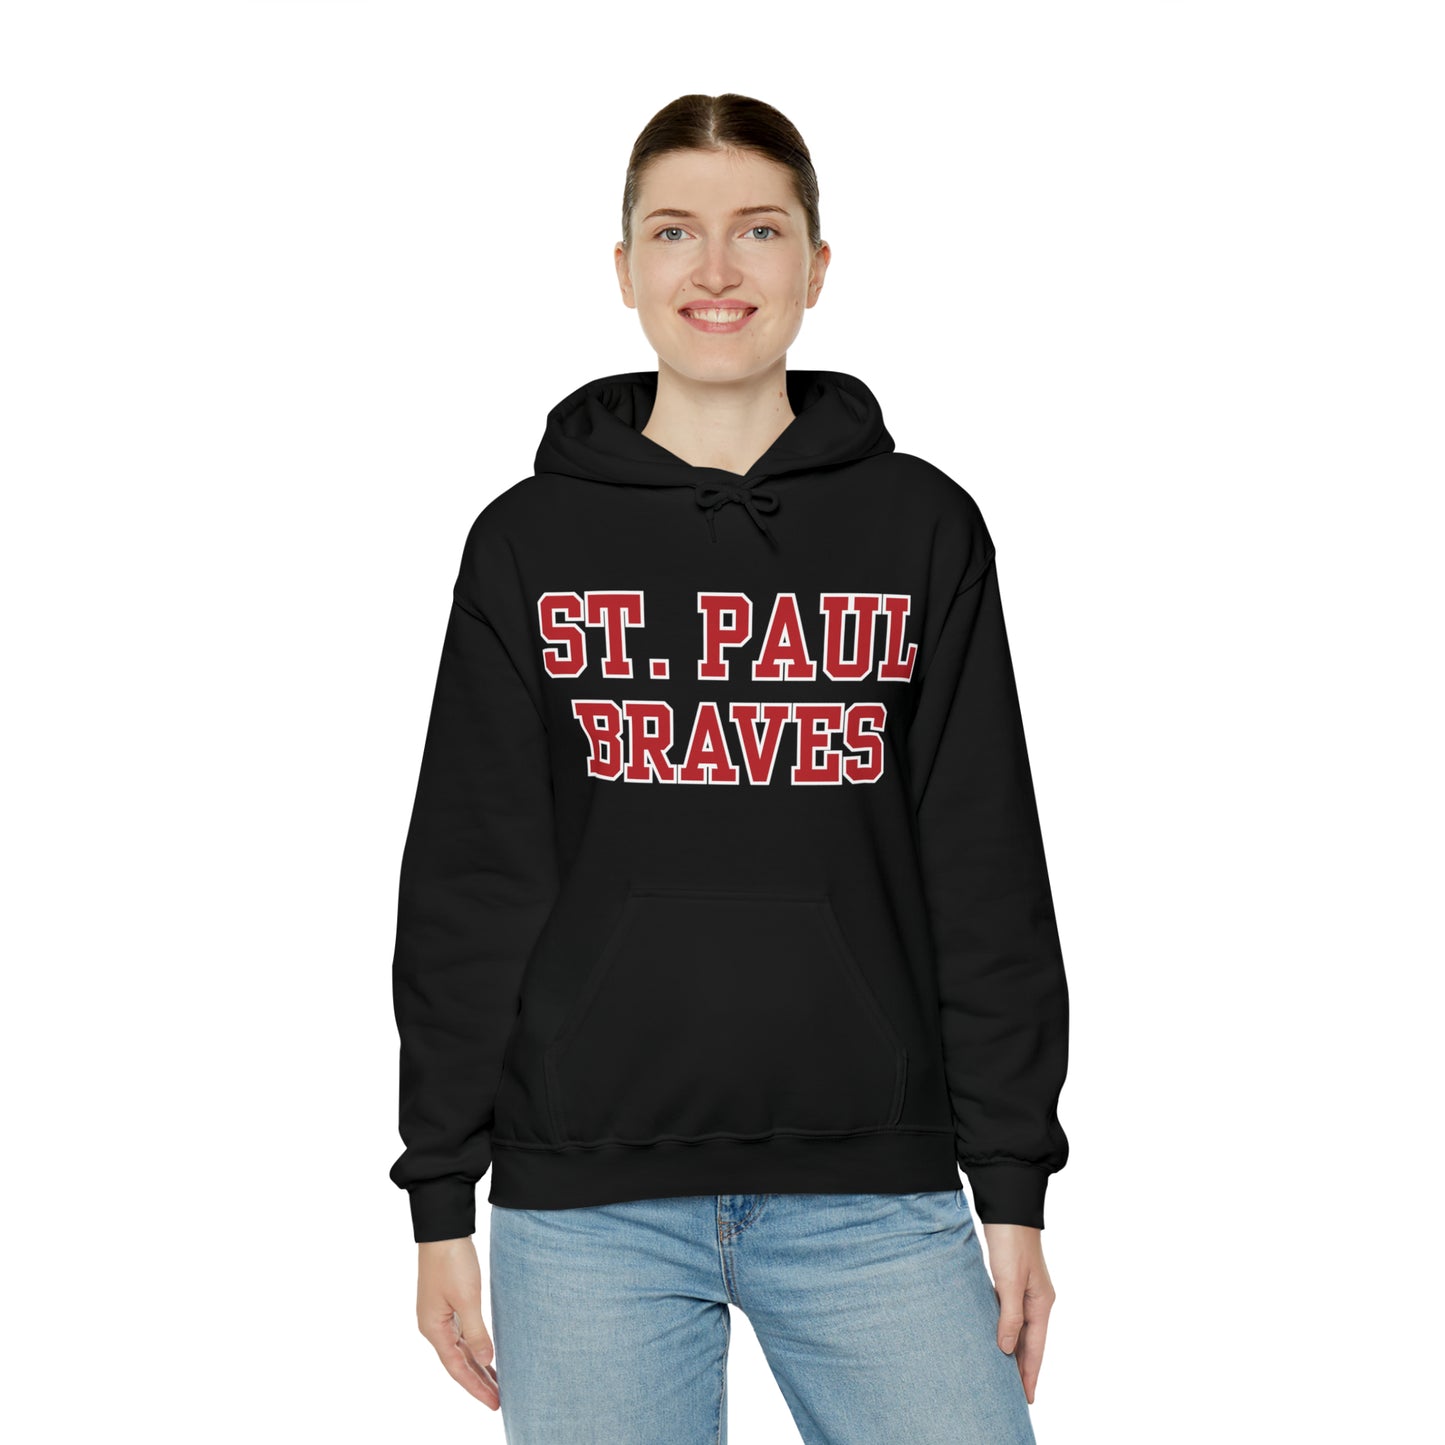 "ST PAUL BRAVES" caps | Unisex Heavy Blend™ Hooded Sweatshirt | 6 Colors